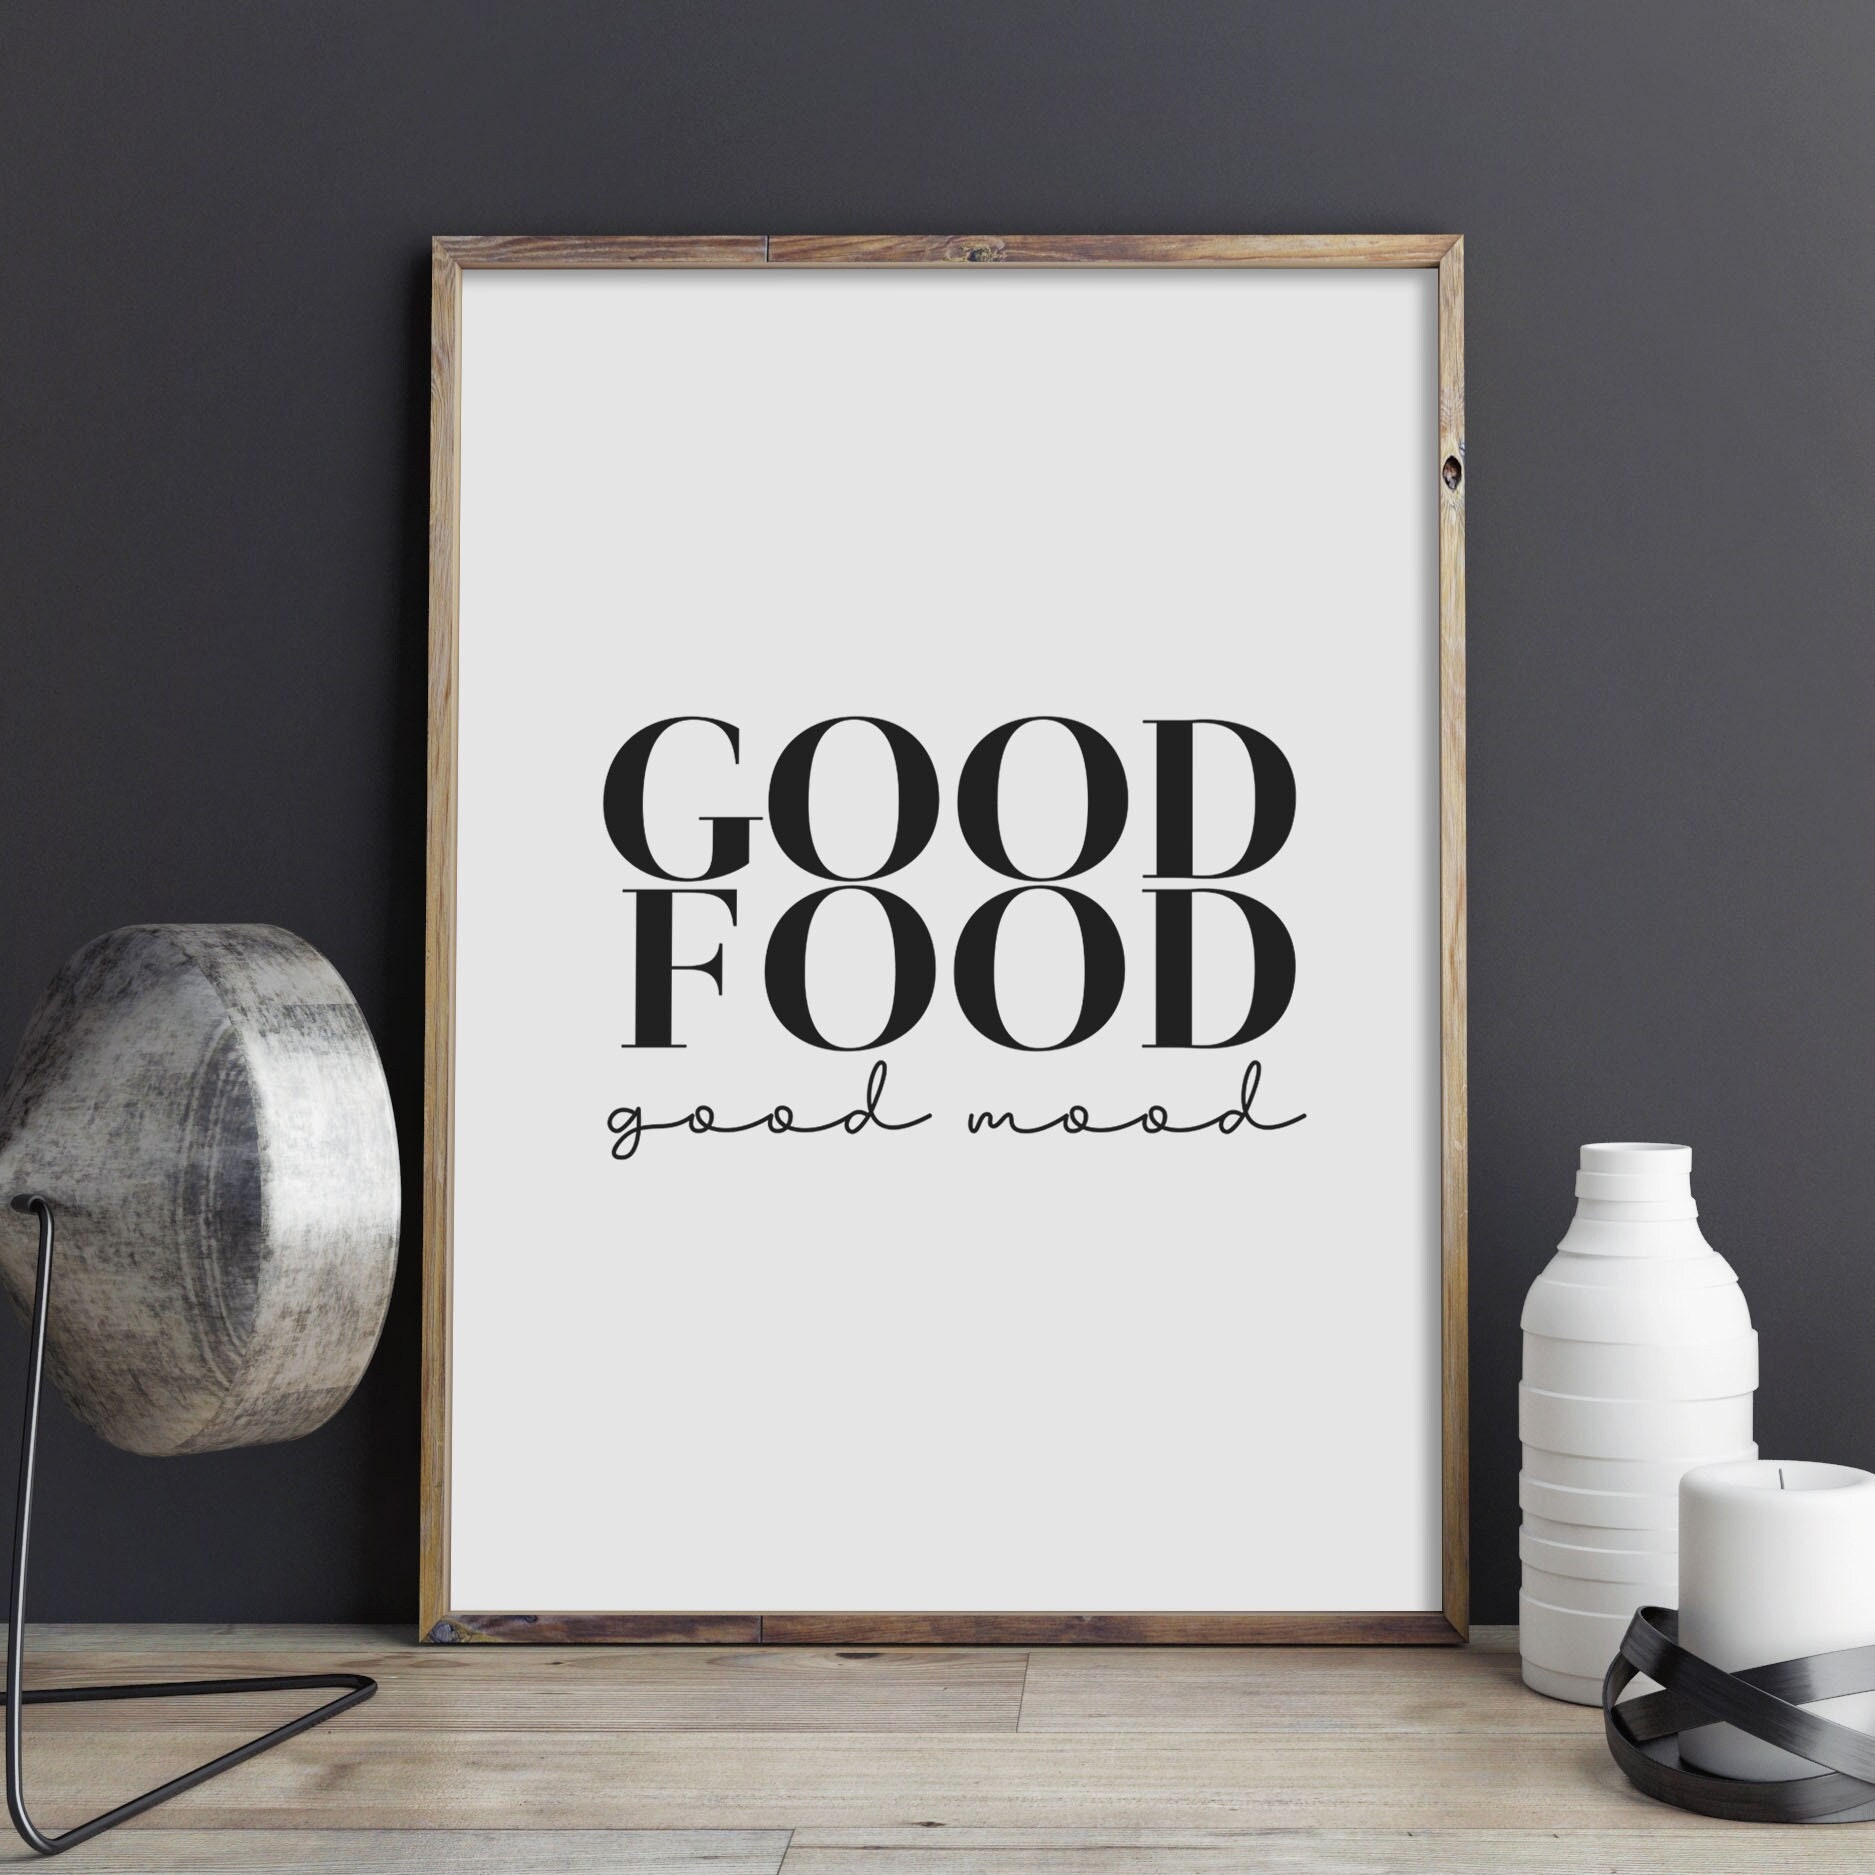 Markteinführung Good Food Sign - Etsy